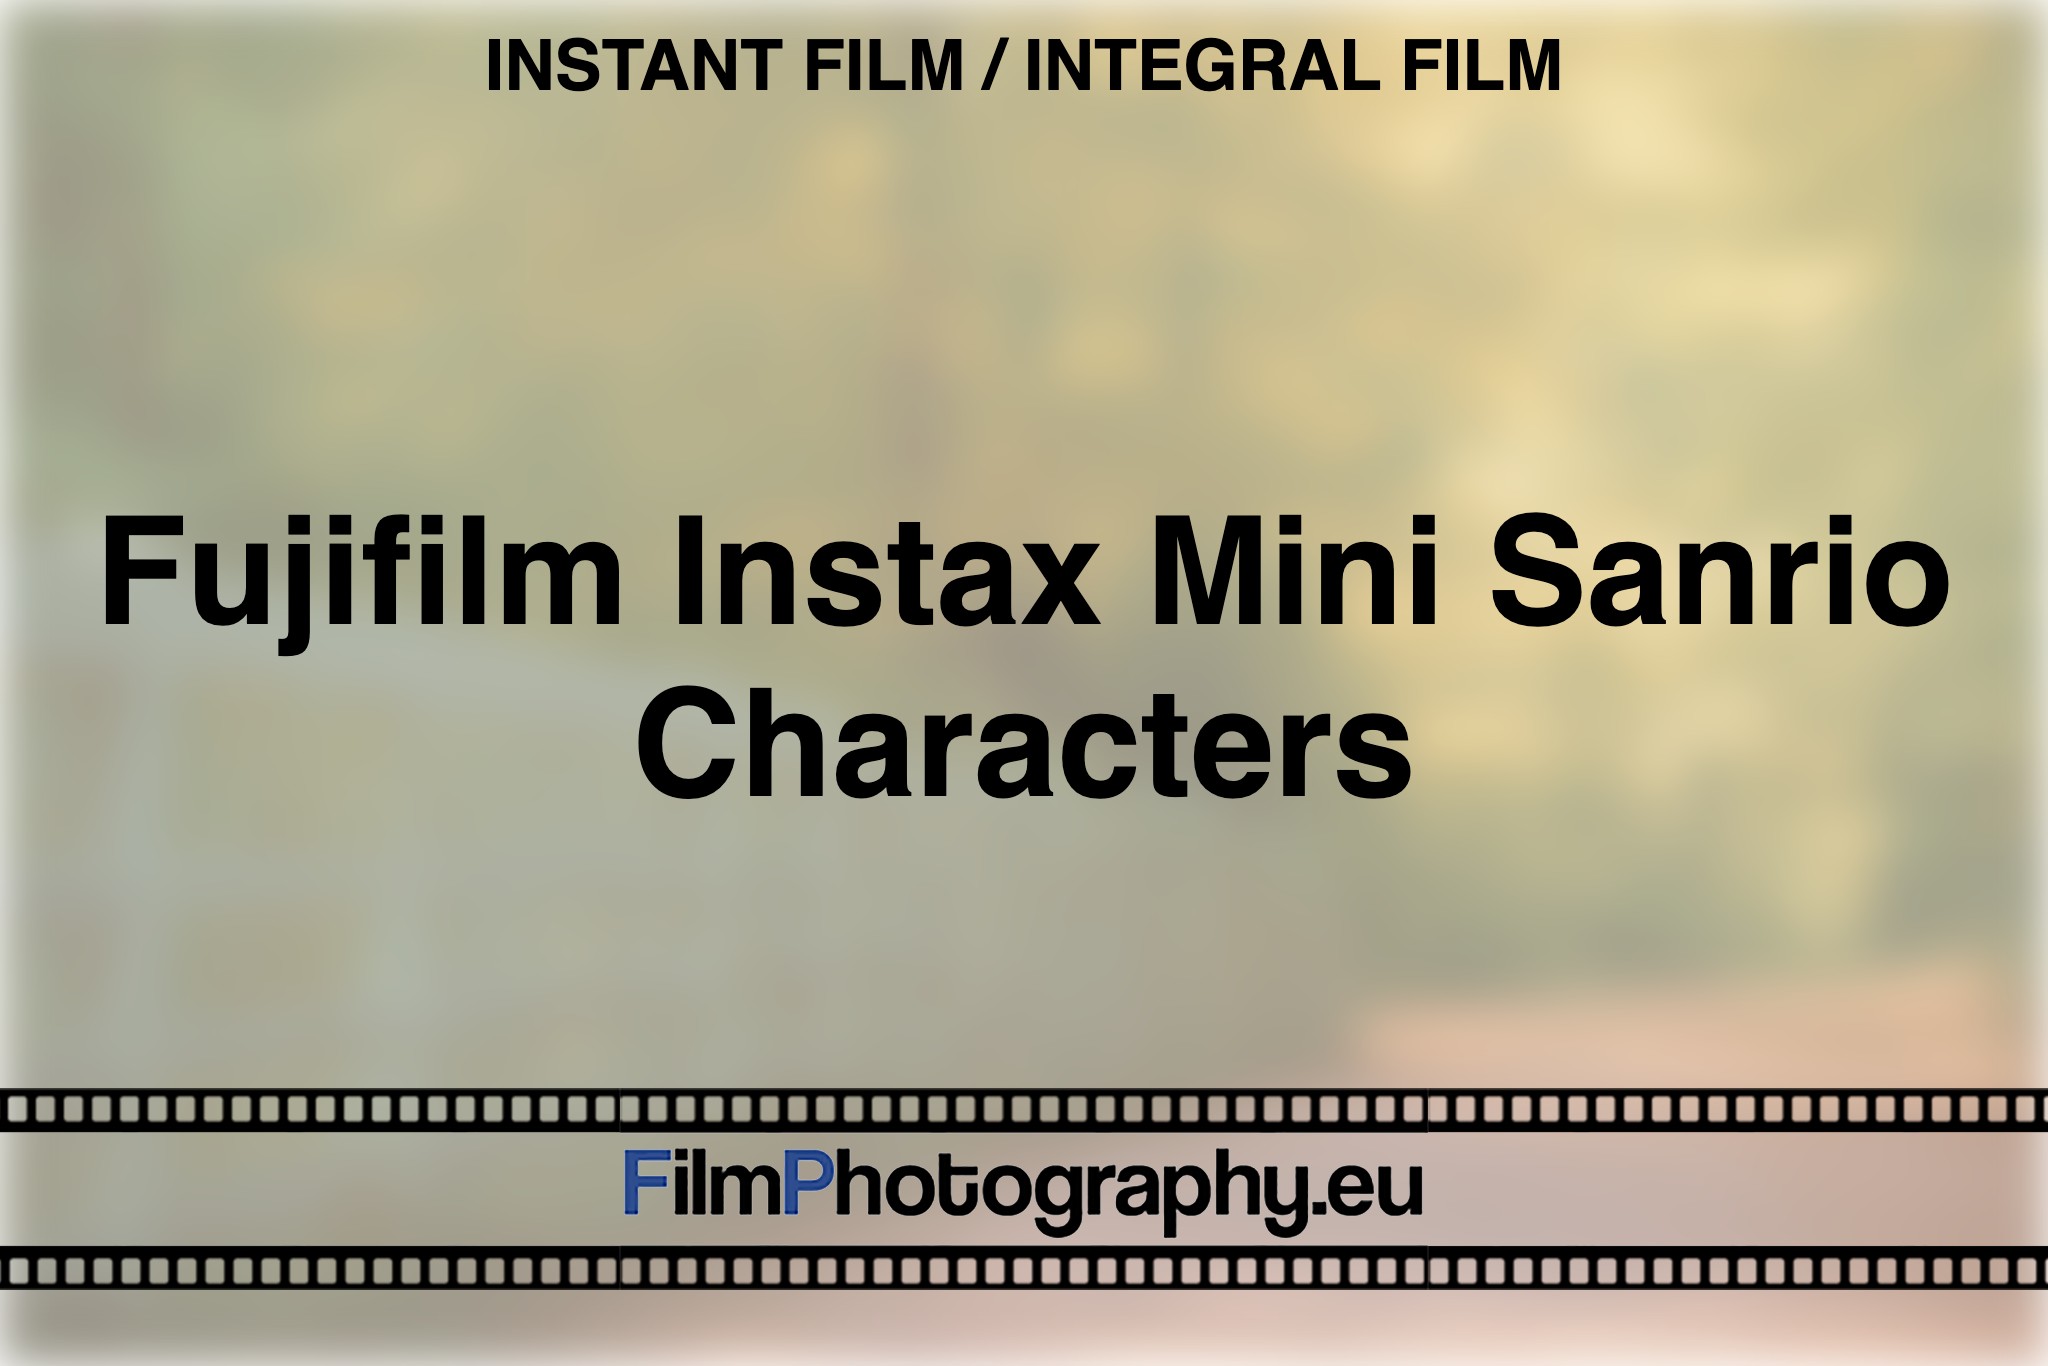 fujifilm-instax-mini-sanrio-characters-instant-film-integral-film-bnv